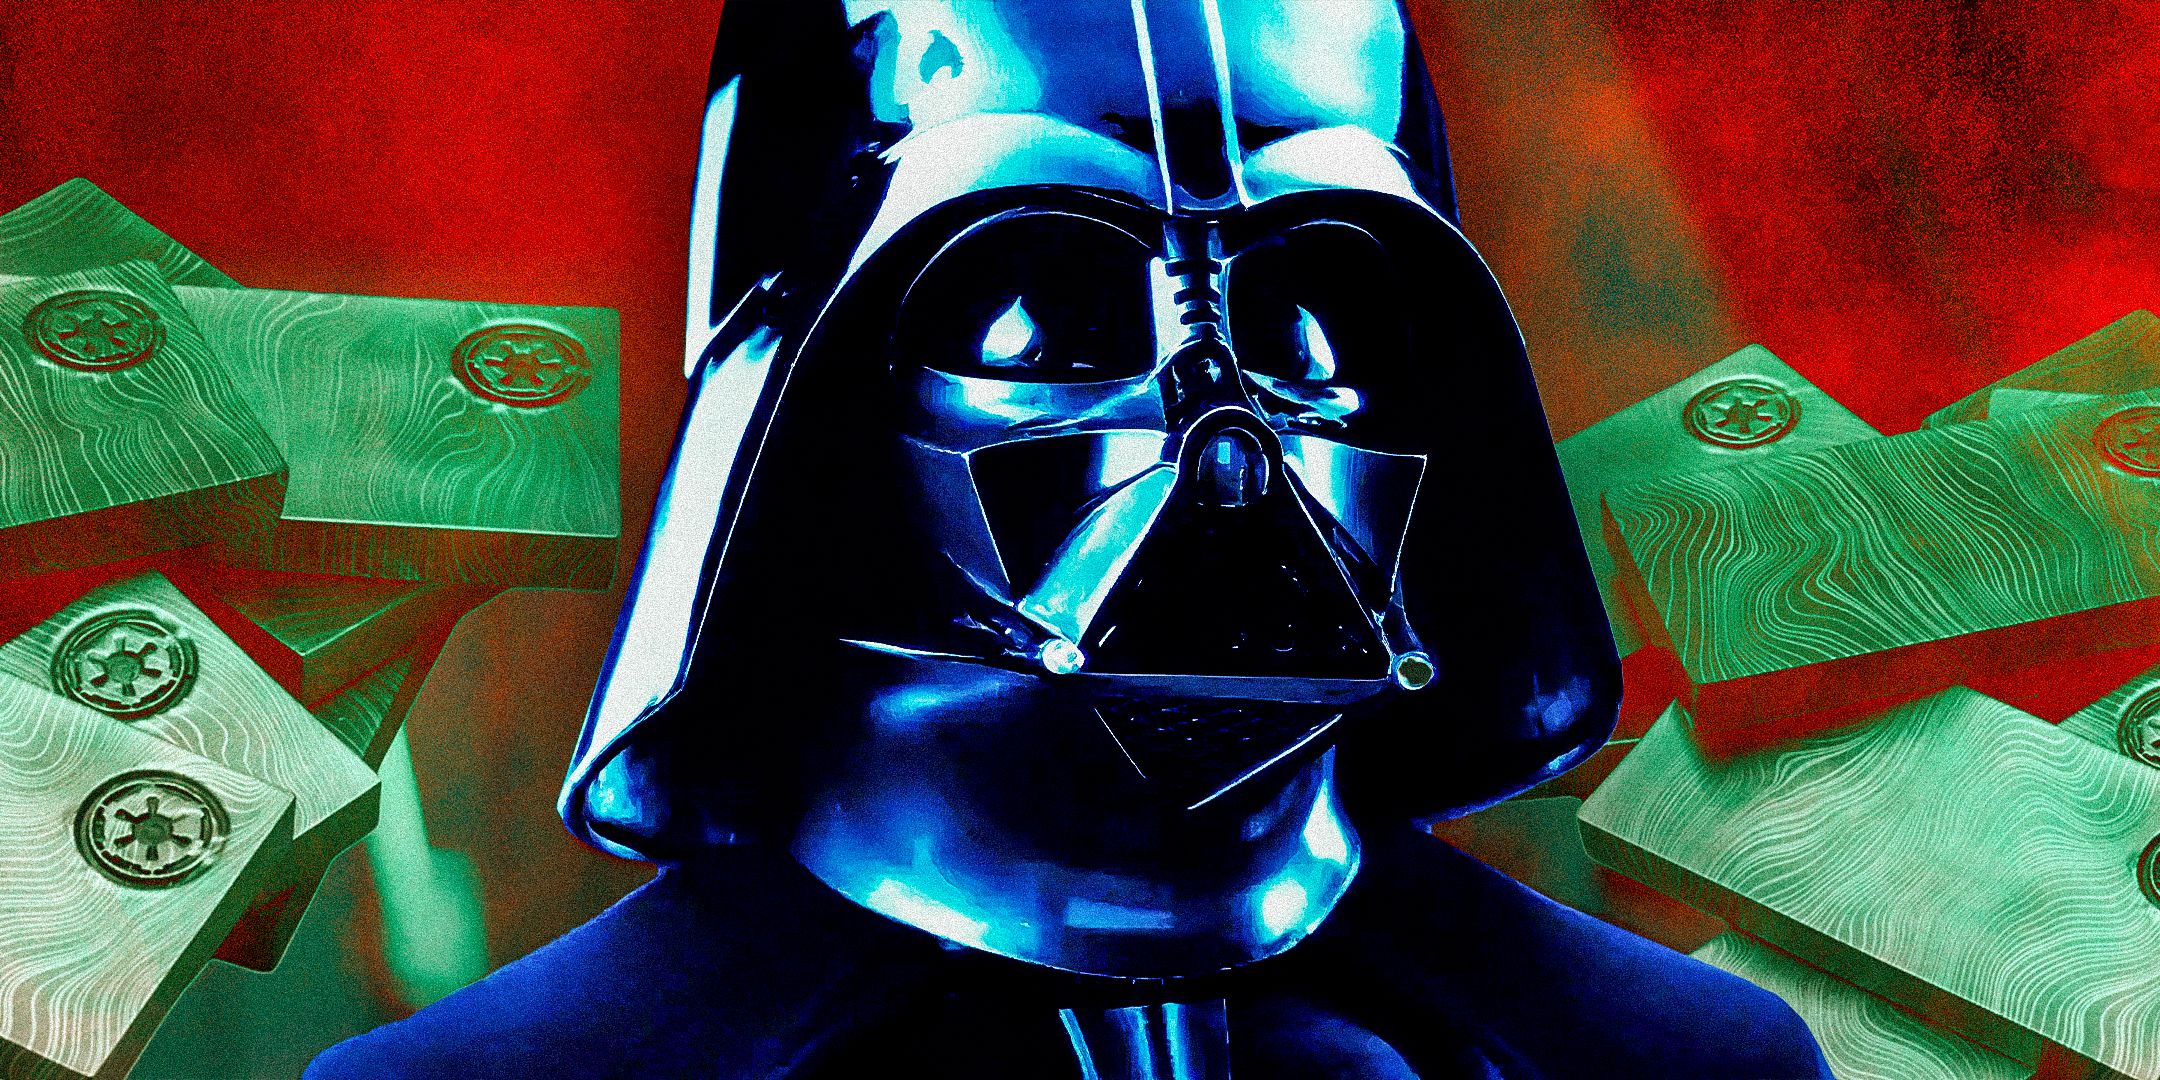 Darth Vader in Star Wars edited with beskar ingots from The Mandalorian